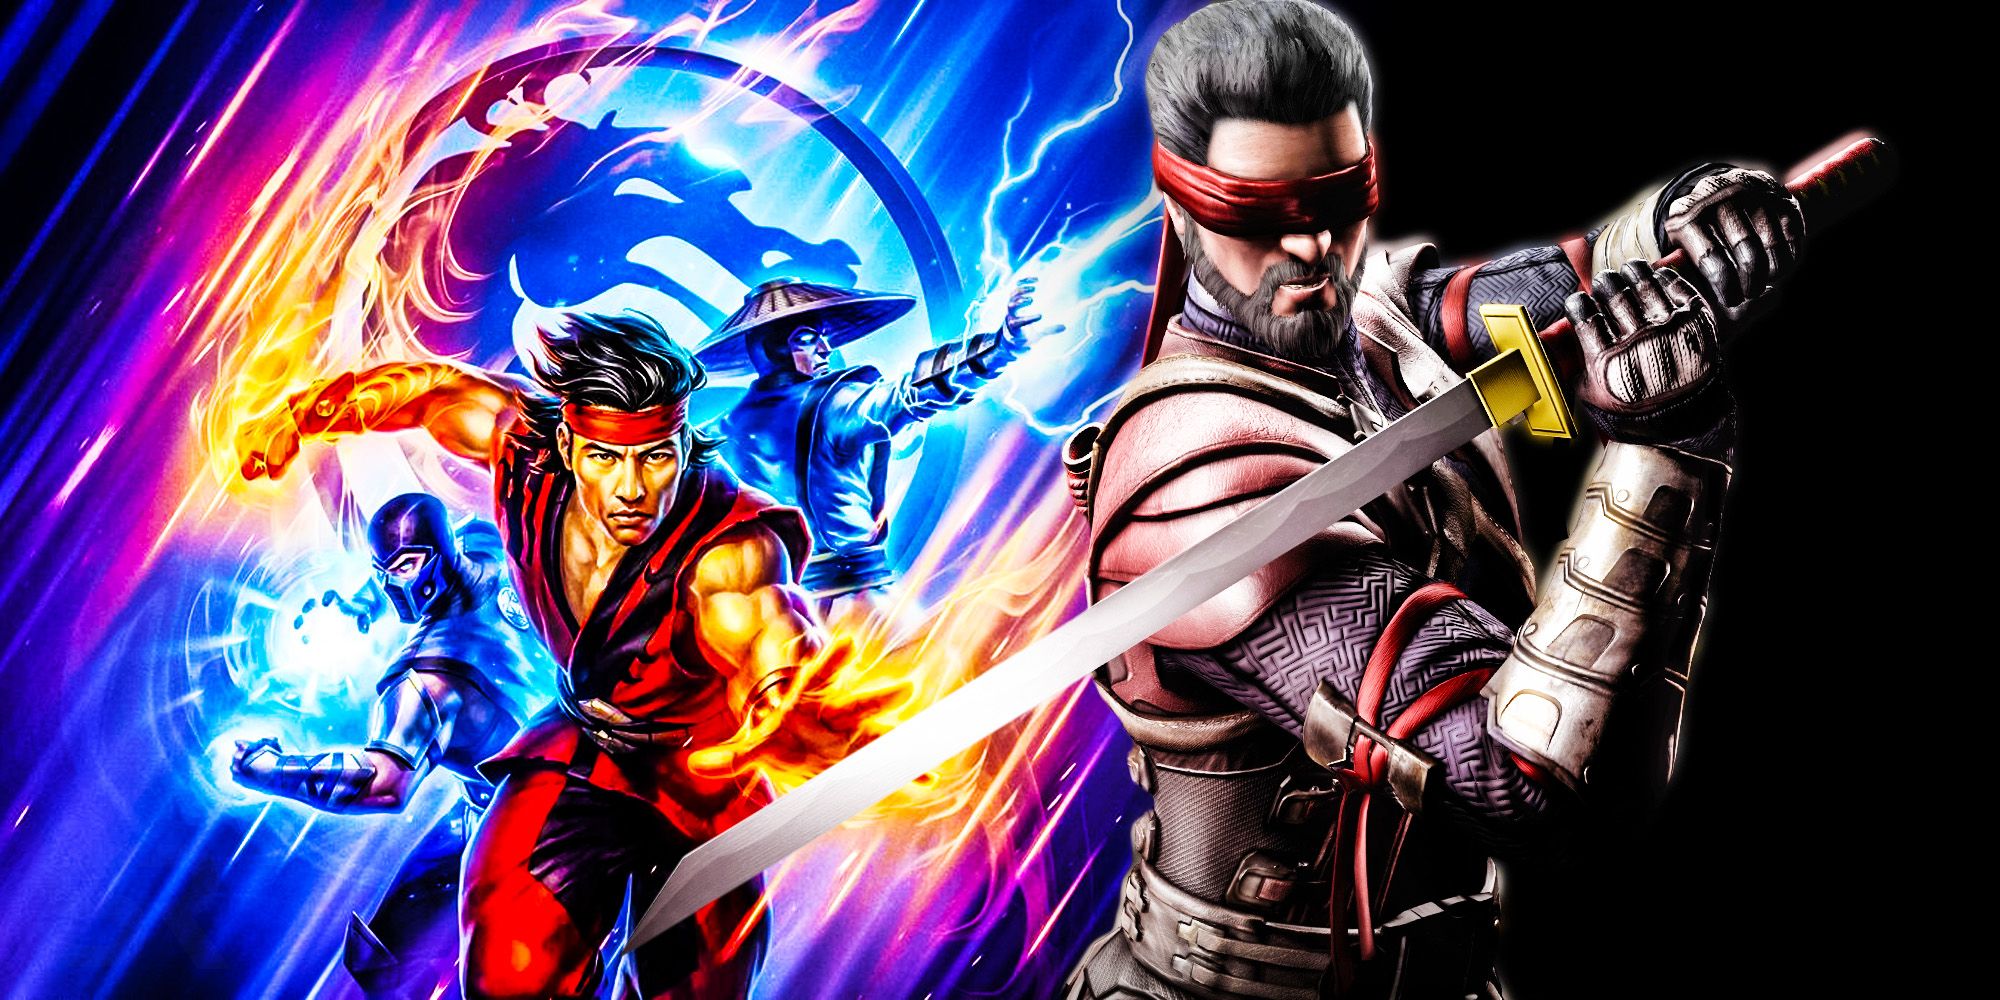 Mortal Kombat Legends: Snow Blind Attacks Home in Oct.